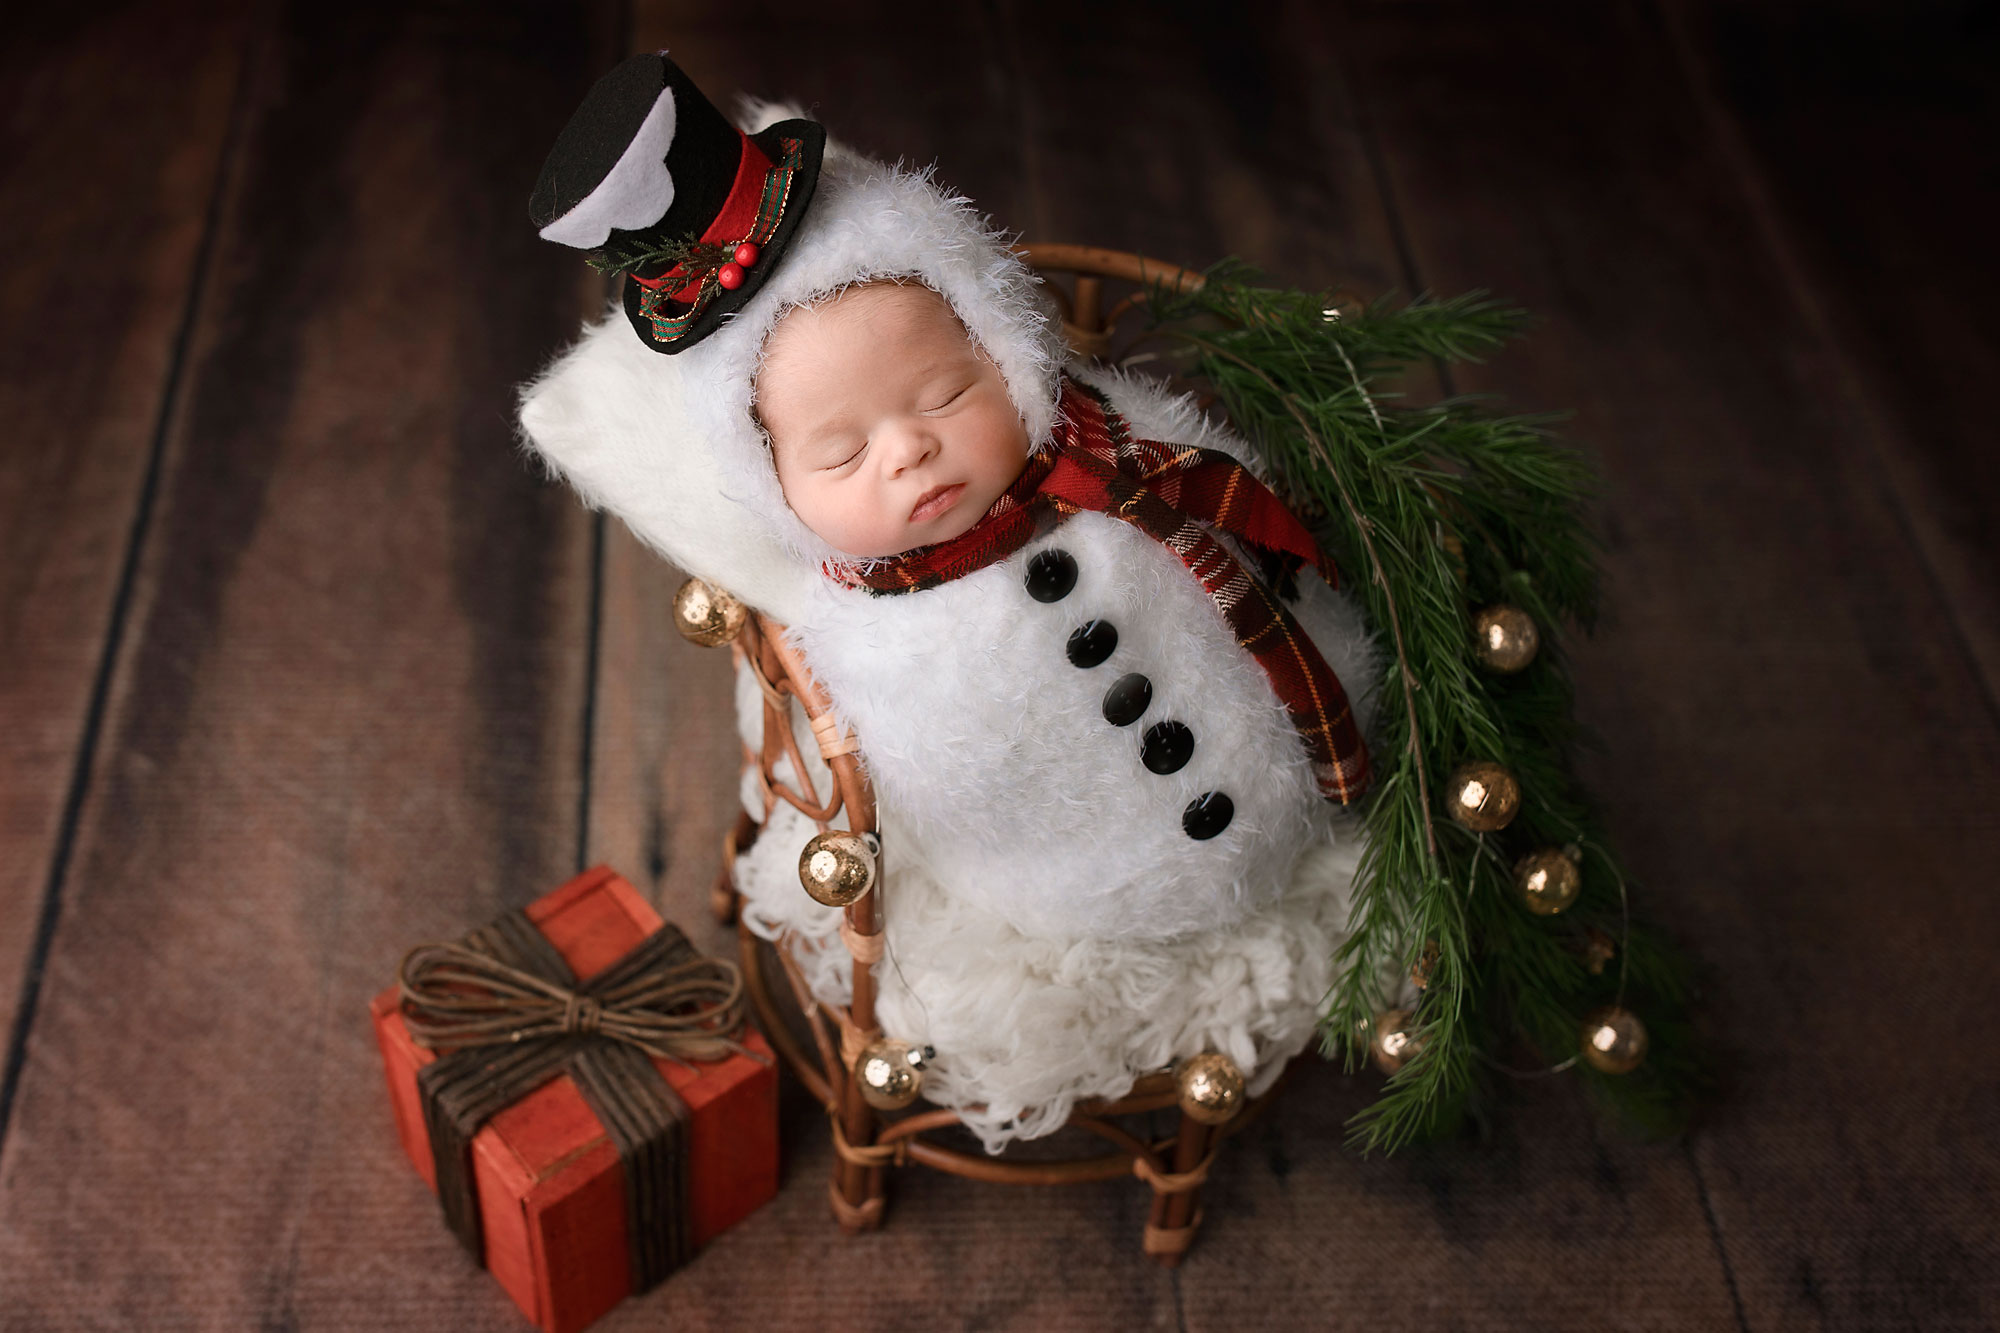 newborn baby dressed like a snowman